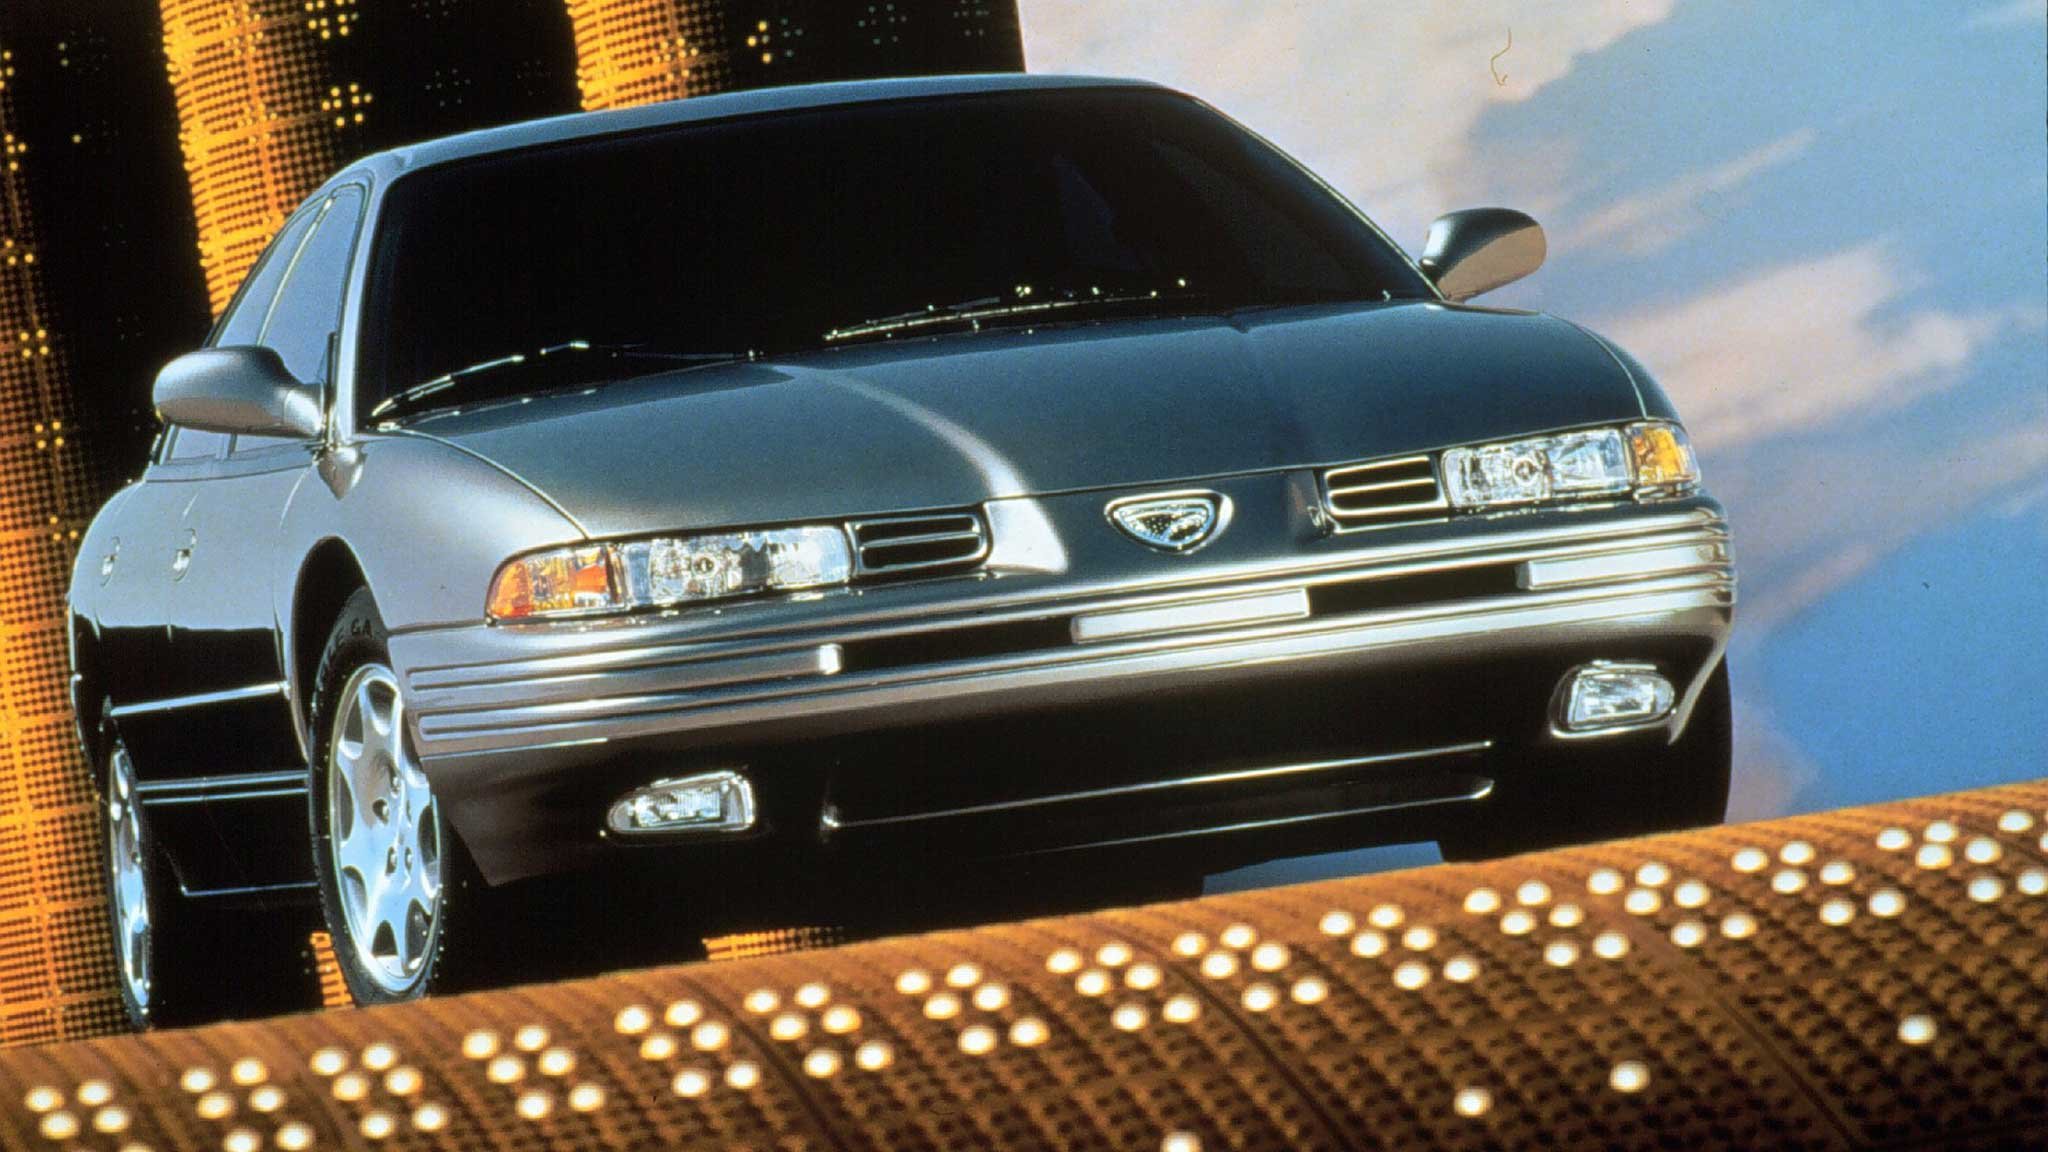 Авто игл. Крайслер игл Вижн. Eagle Vision 1993. Eagle Vision 1992. Chrysler Eagle Vision 1992.